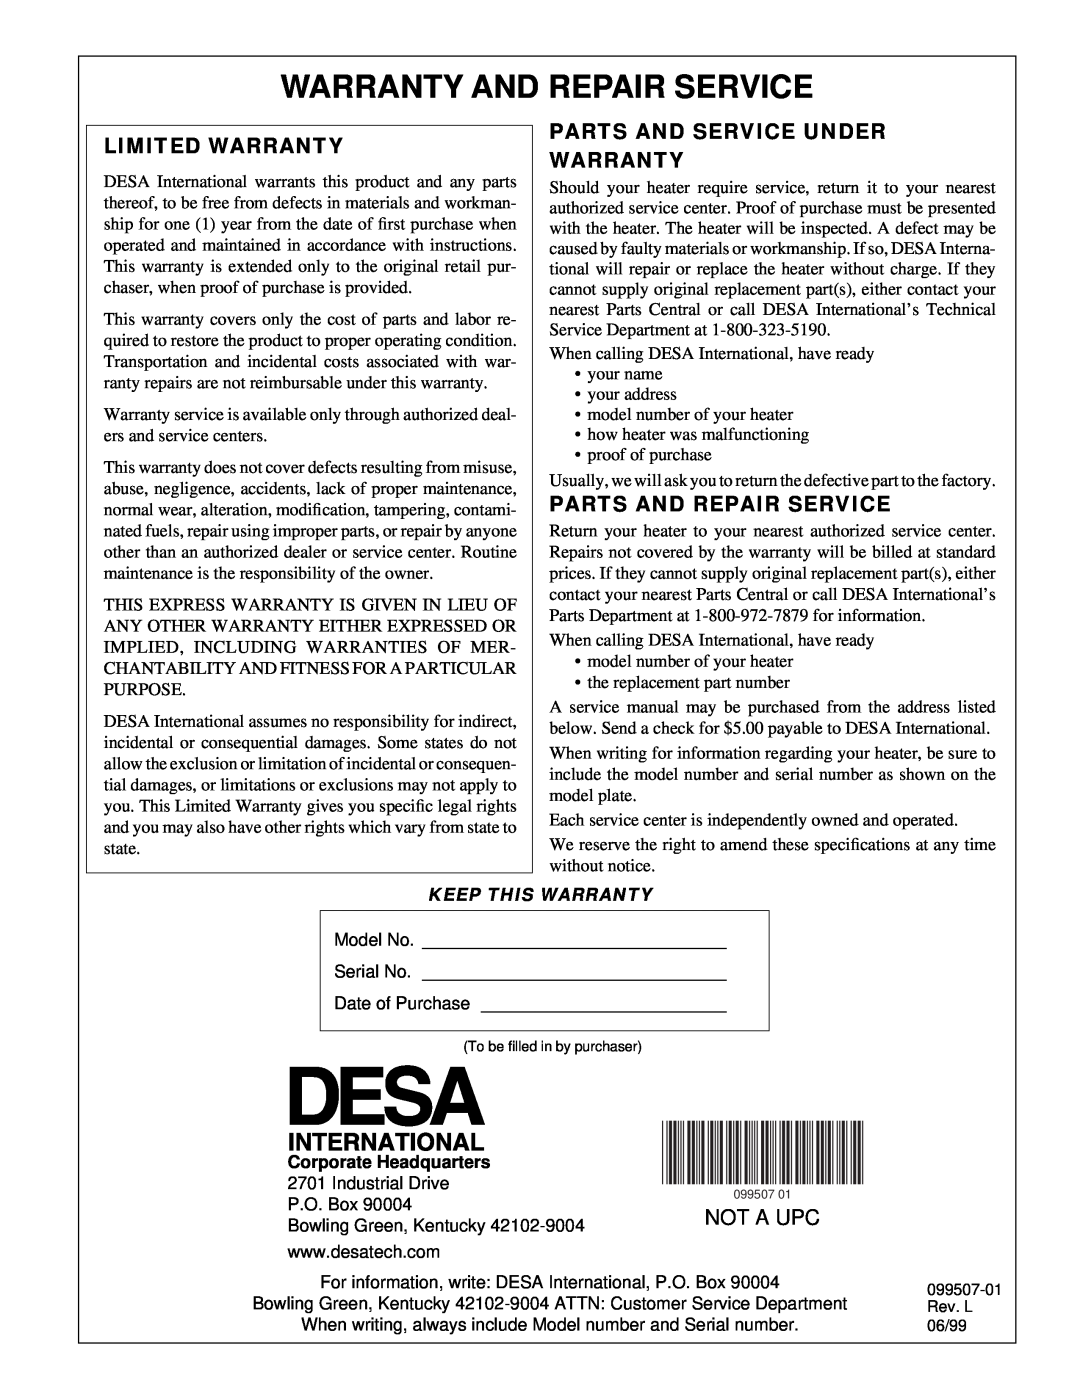 Desa B600D Limited Warranty, Parts And Service Under Warranty, Parts And Repair Service, Warranty And Repair Service 